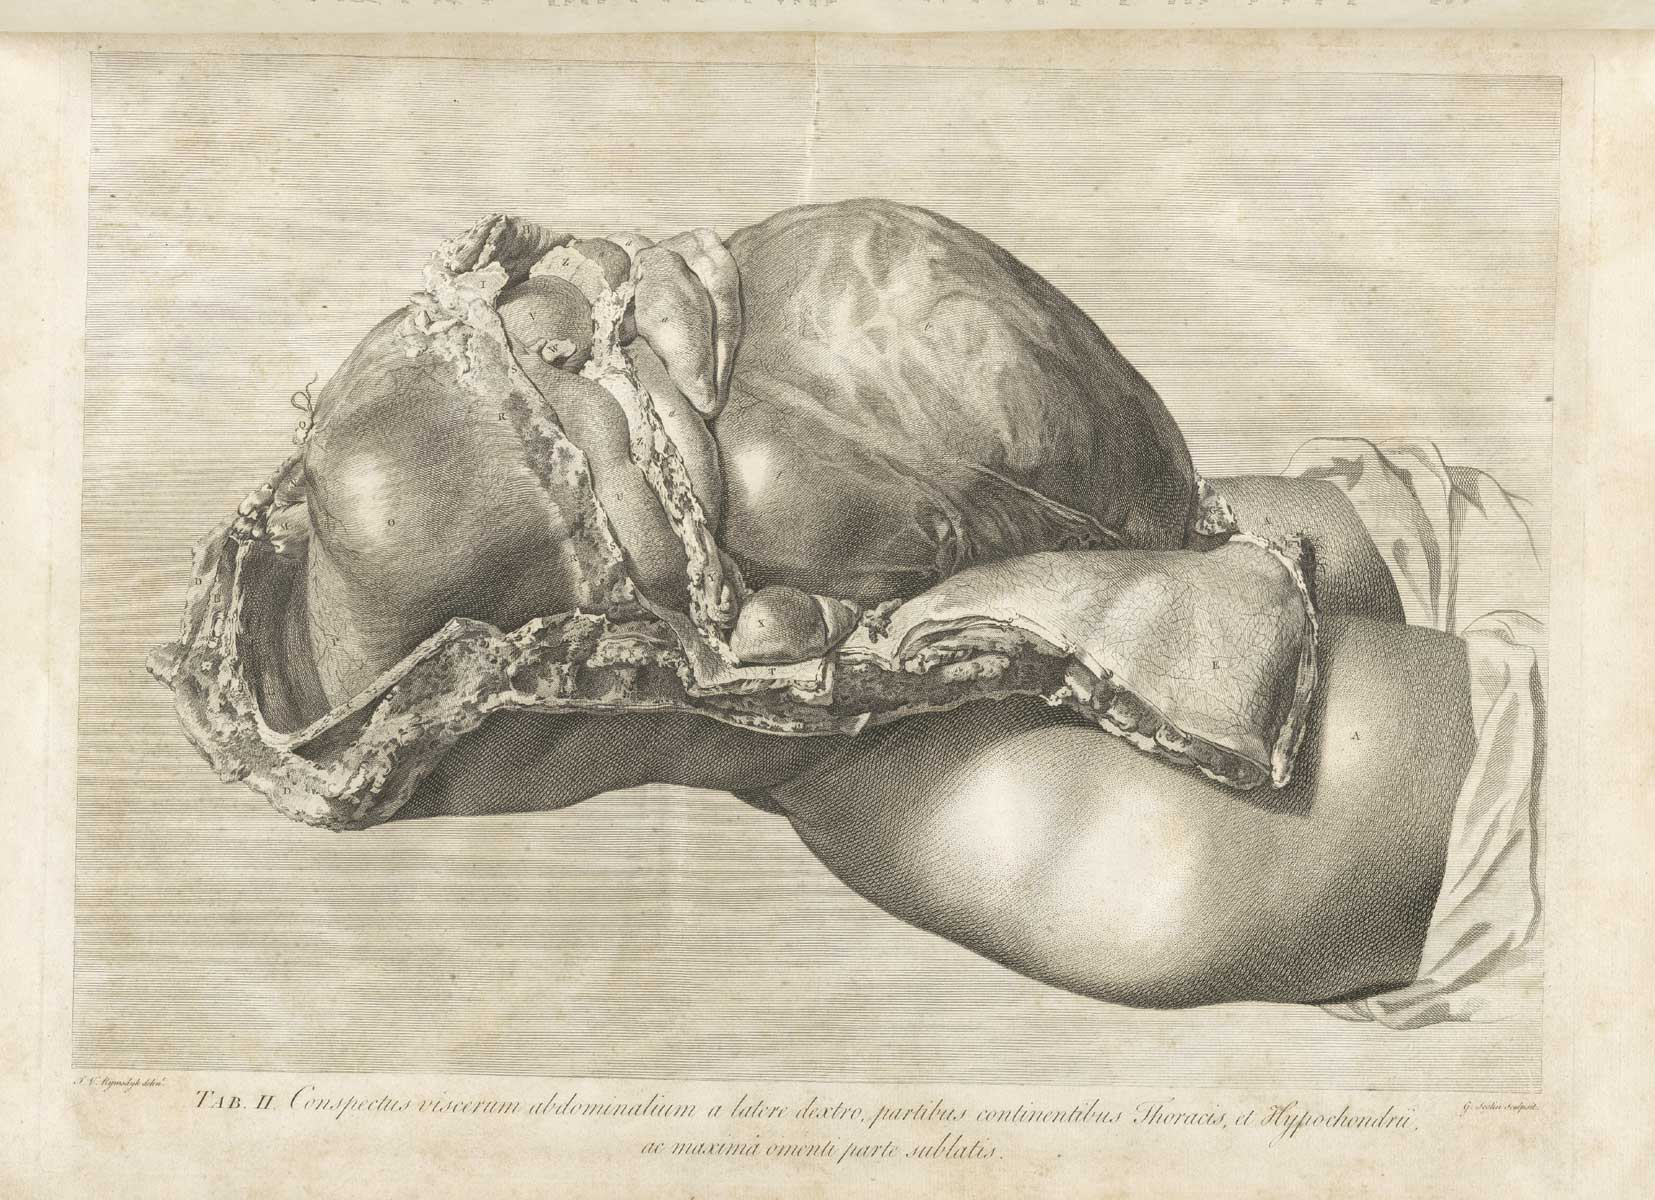 Table 2 of William Hunter's Anatomia uteri humani gravidi tabulis illustrata, featuring the right side view of female dissected to expose the gravid uterus.